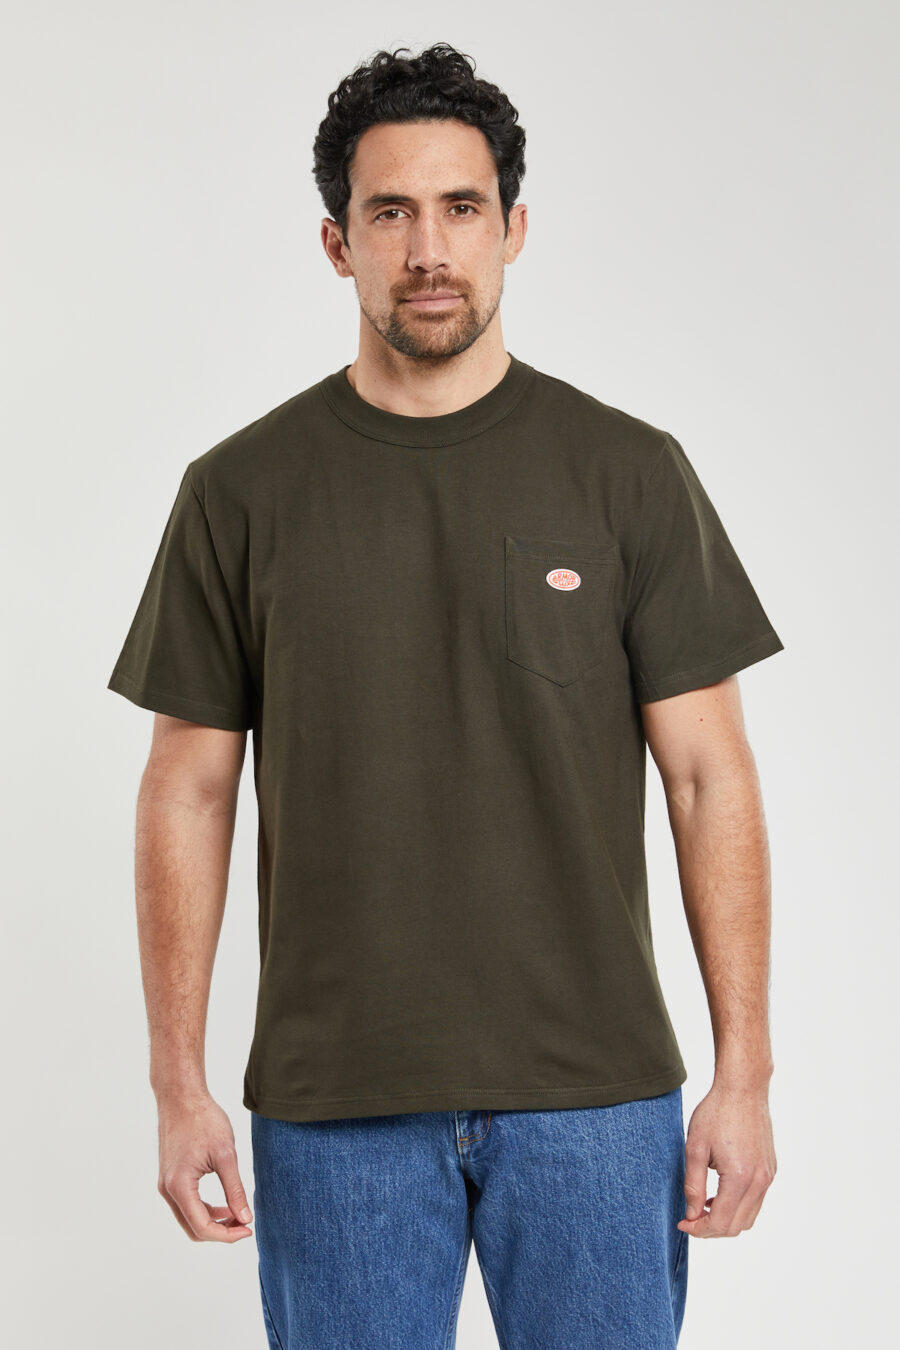 Armor-Lux - Pocket T-Shirt Héritage, Sherwood